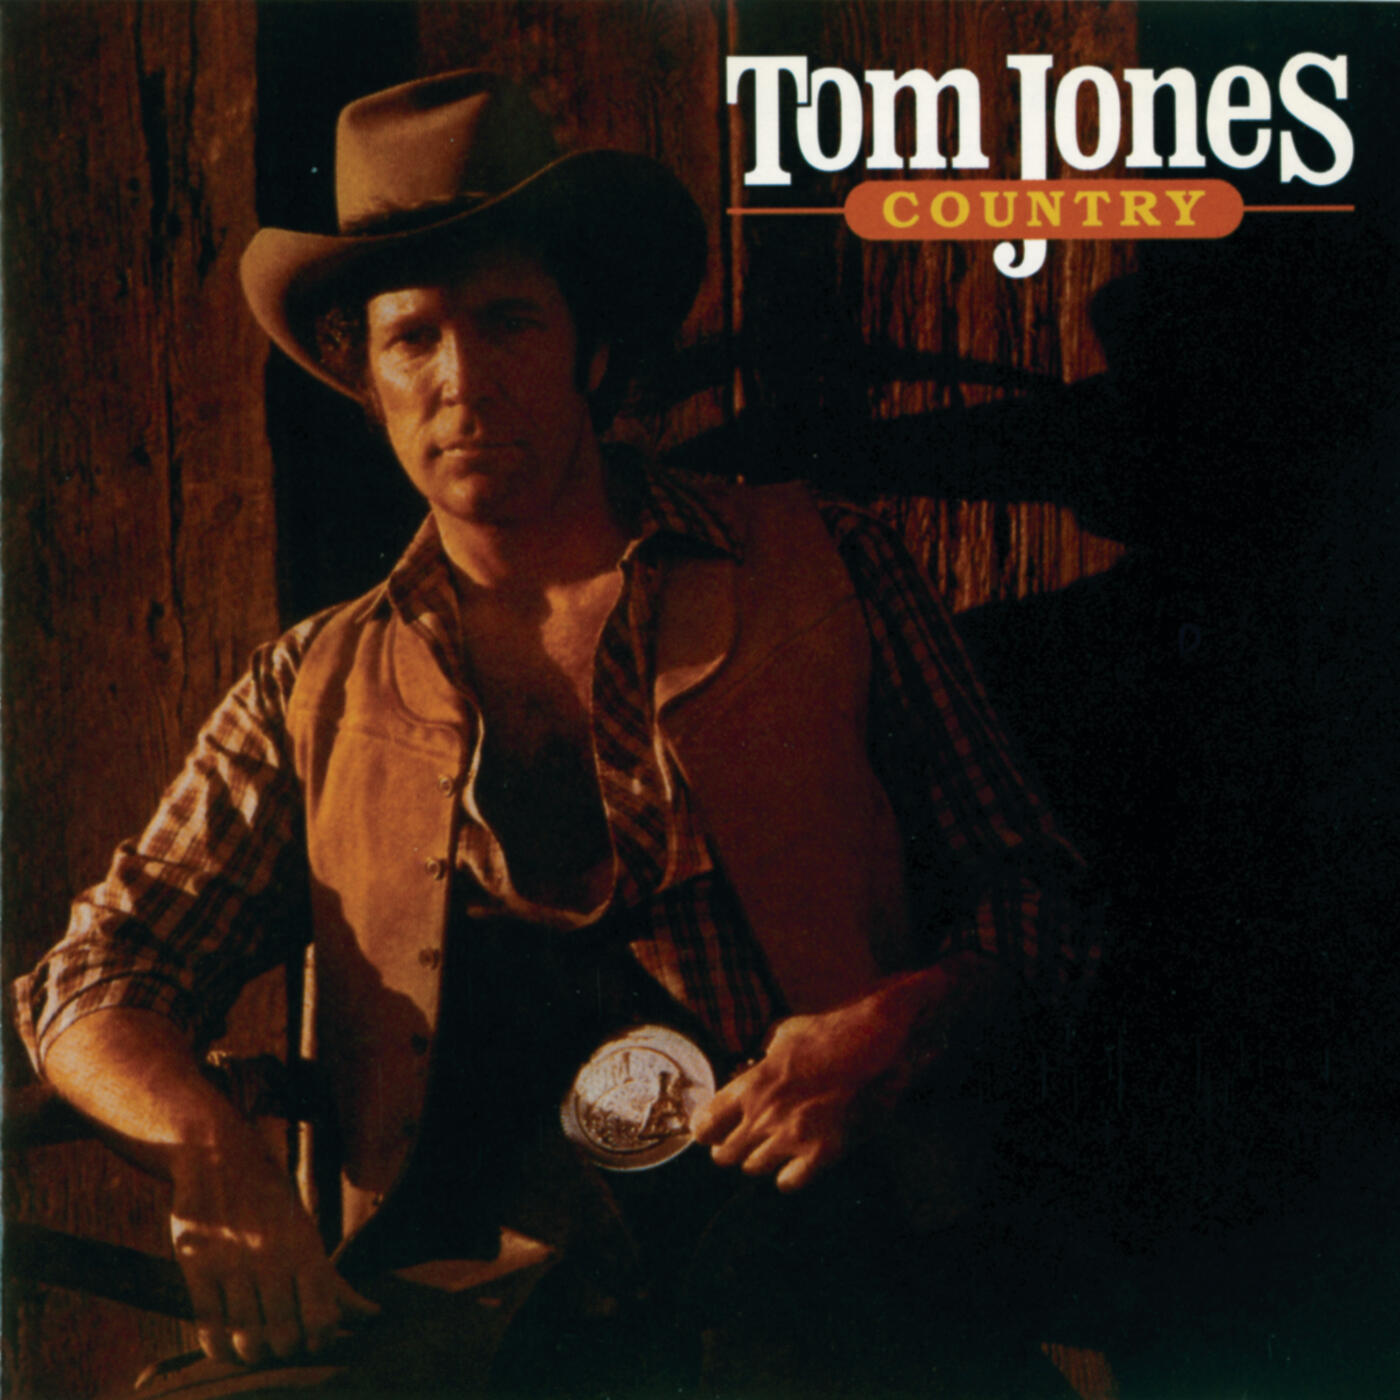 Tom Jones Country iHeart